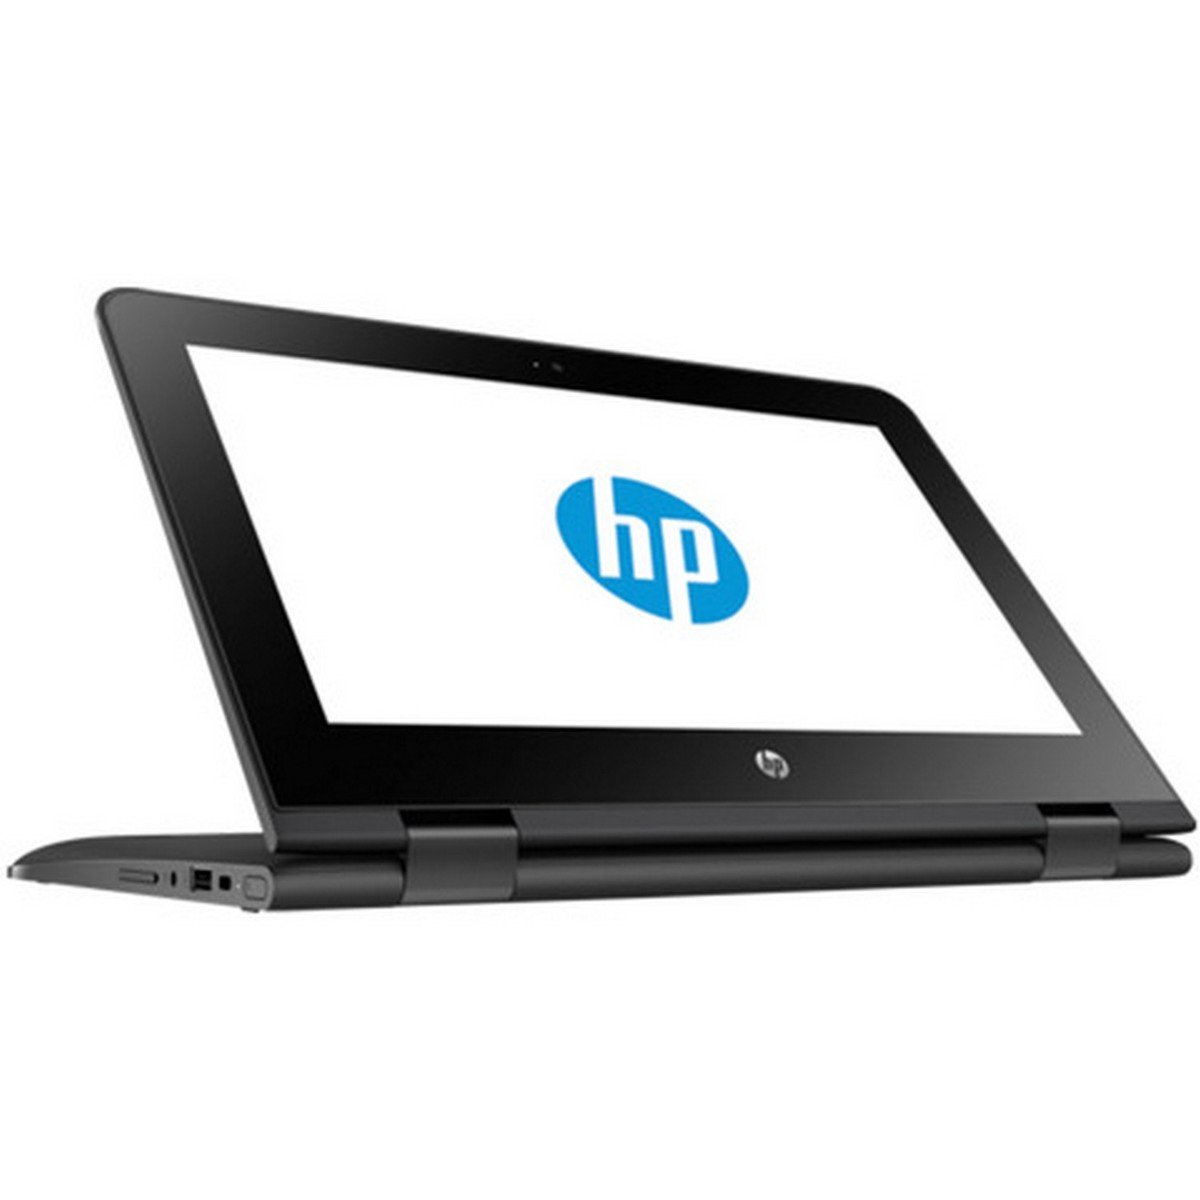 HP 2 in1 Noteboook STREAM X360 ST11-AA002 Celeron Black